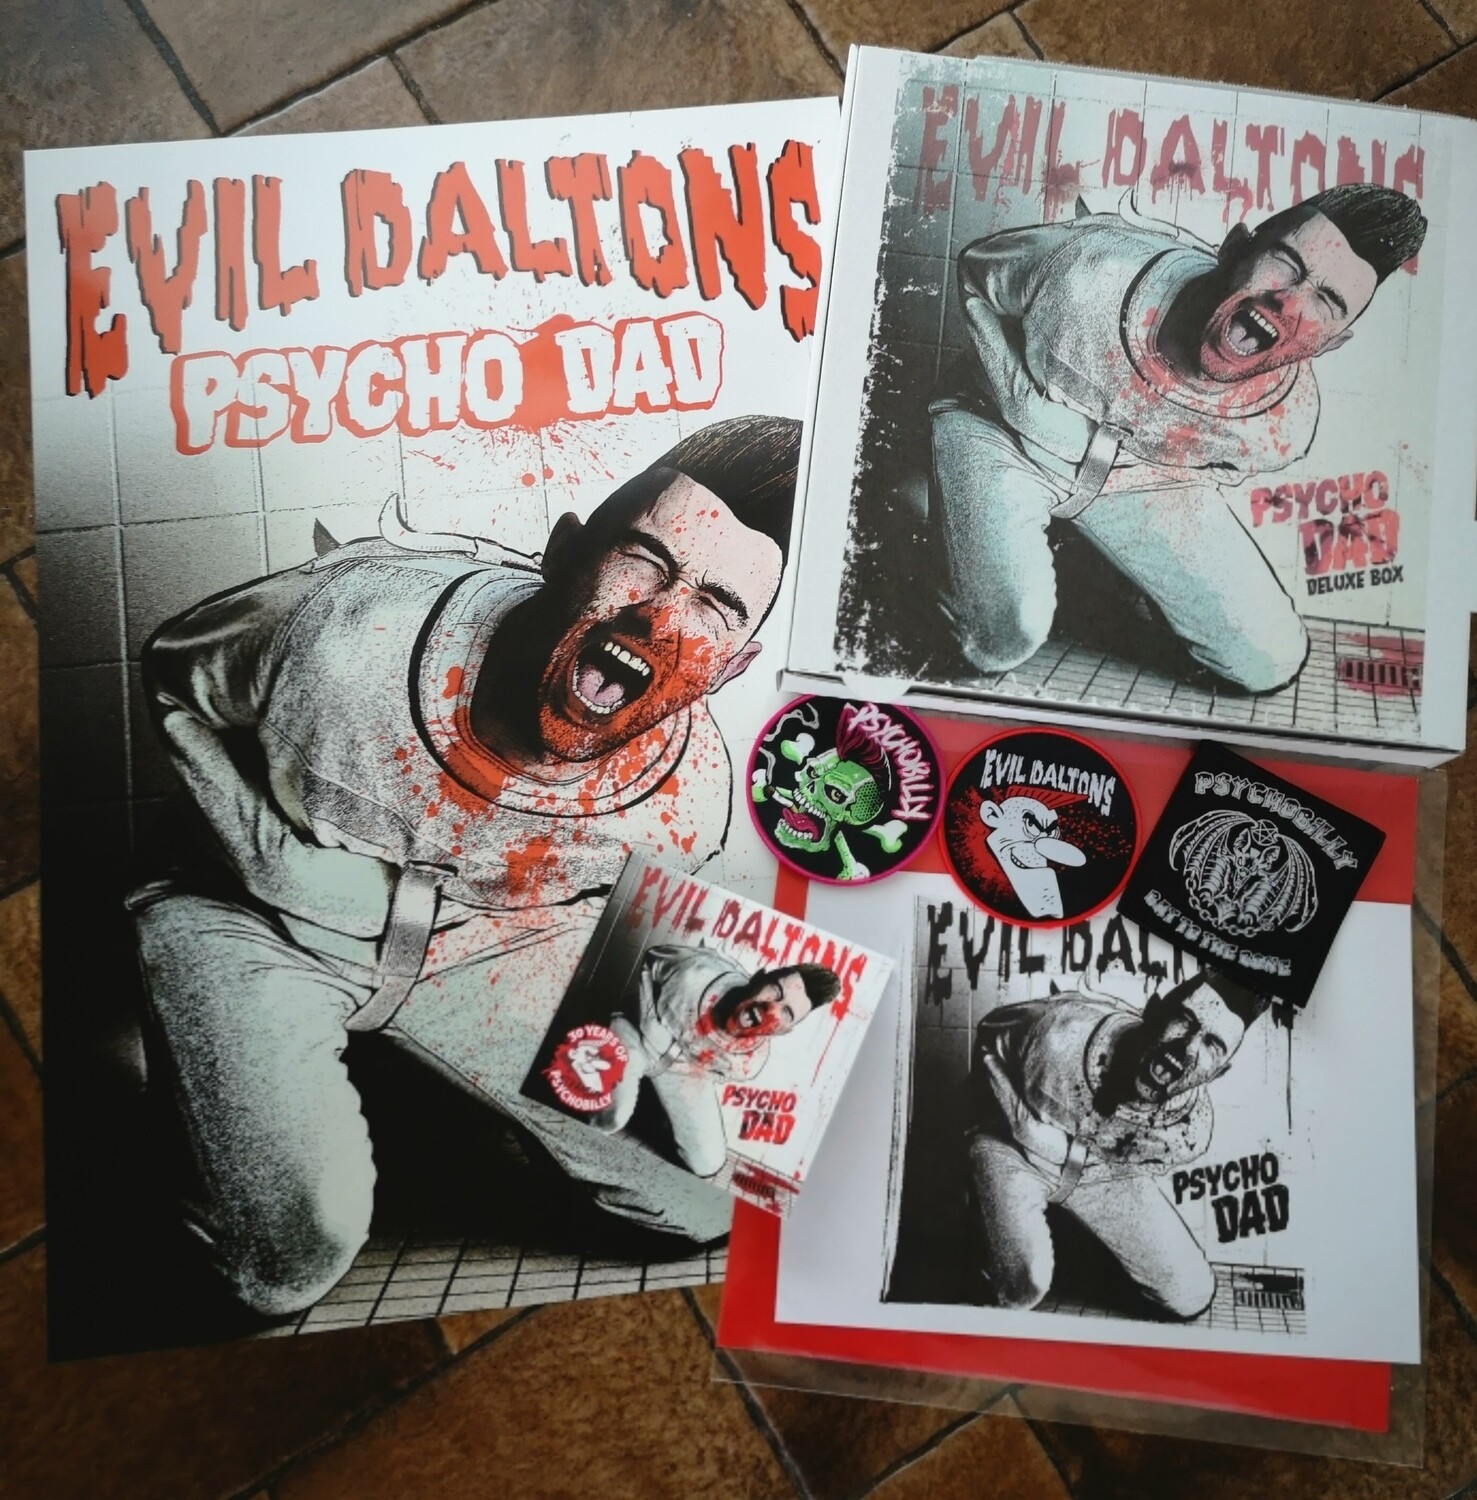 BOX - Evil Daltons - Psycho Dad / 12" Vinyl BLACK / TEST PRESSING / Limited to 10 pieces